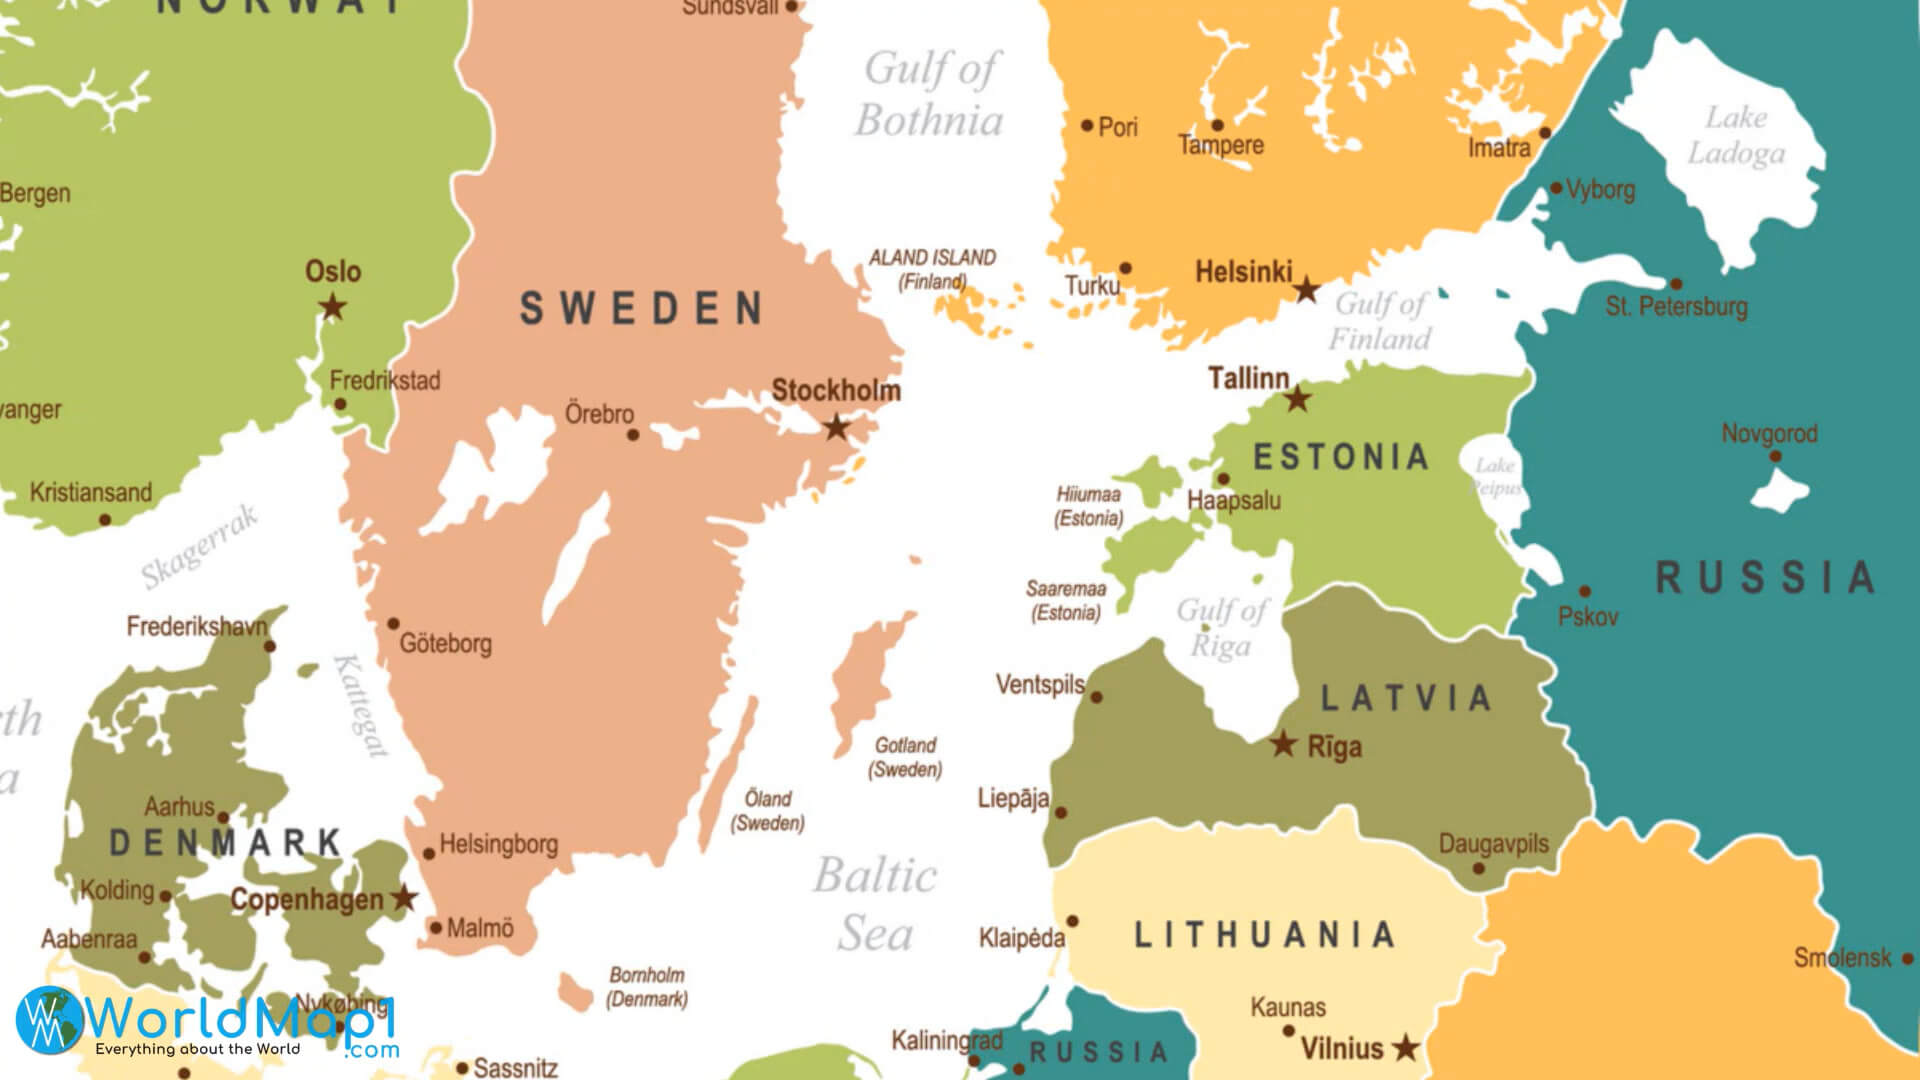 Tallinn Capital of Estonia Map